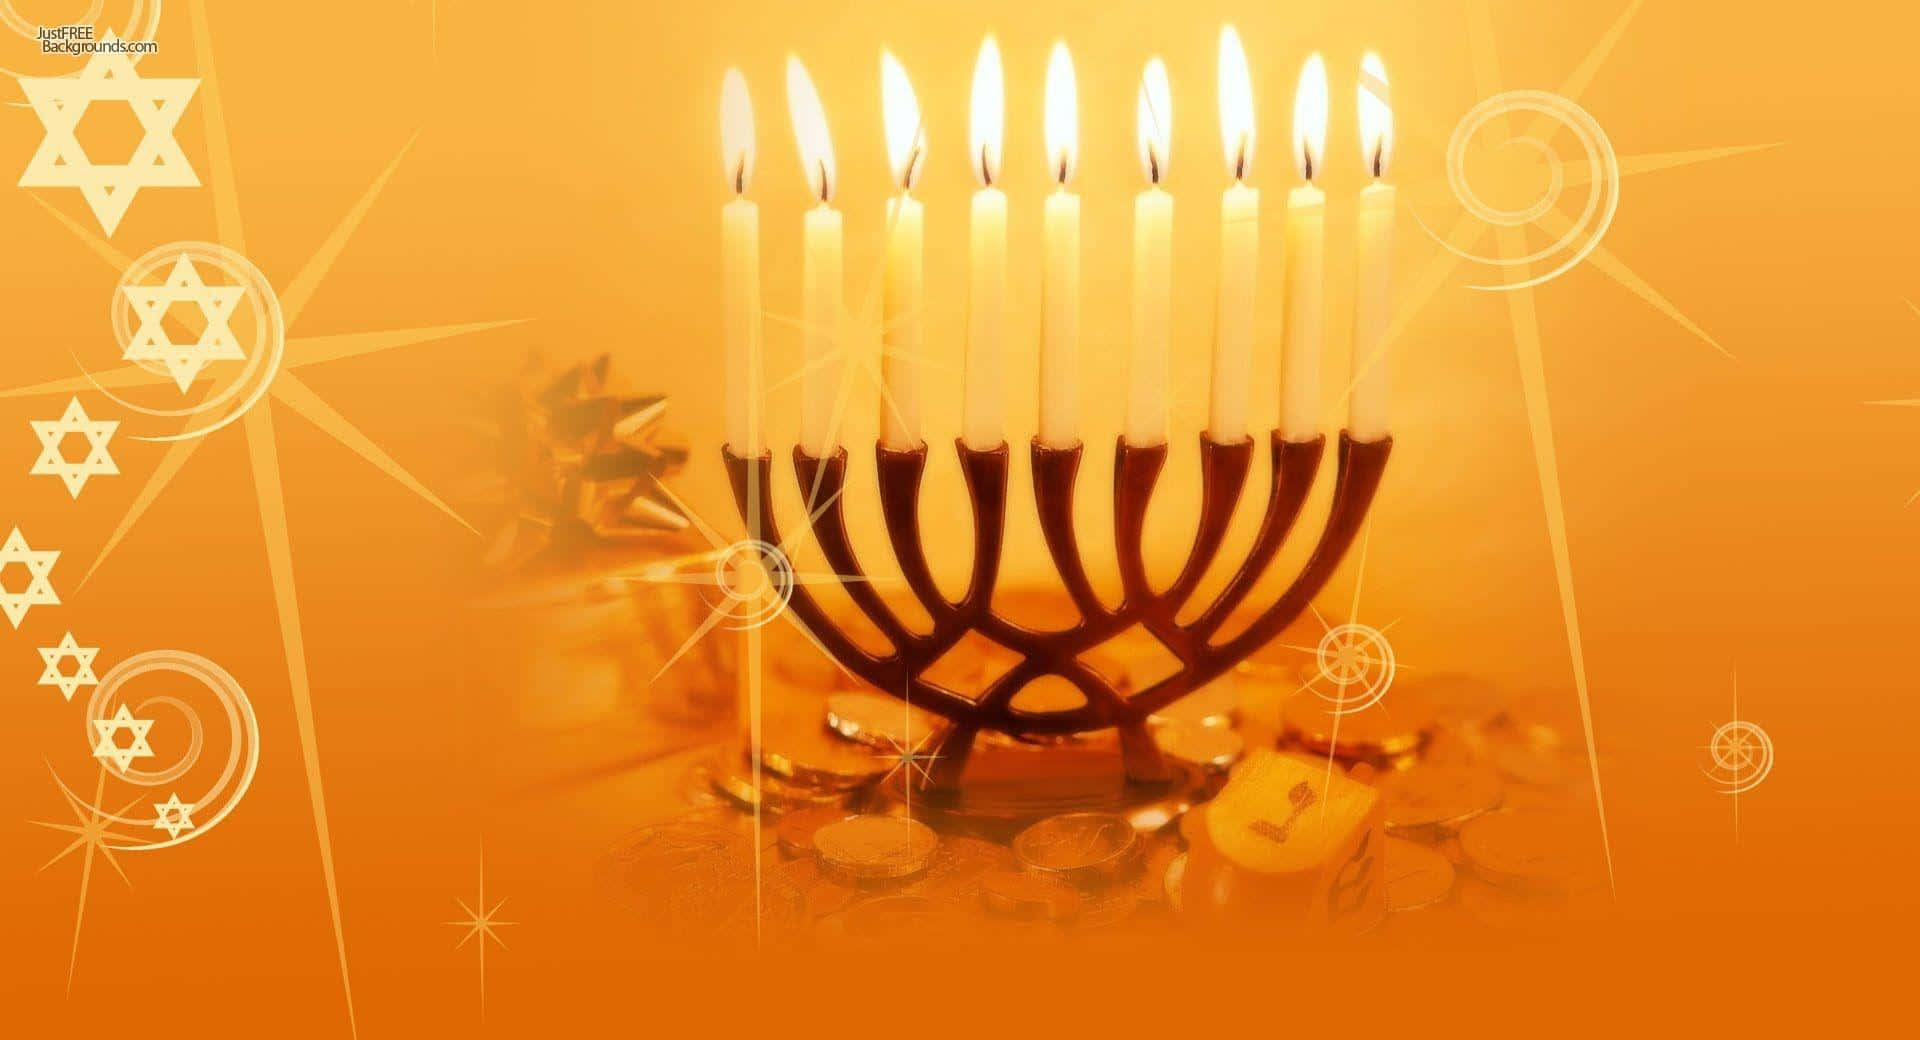 Celebrate the Festival of Lights - Hanukkah!'